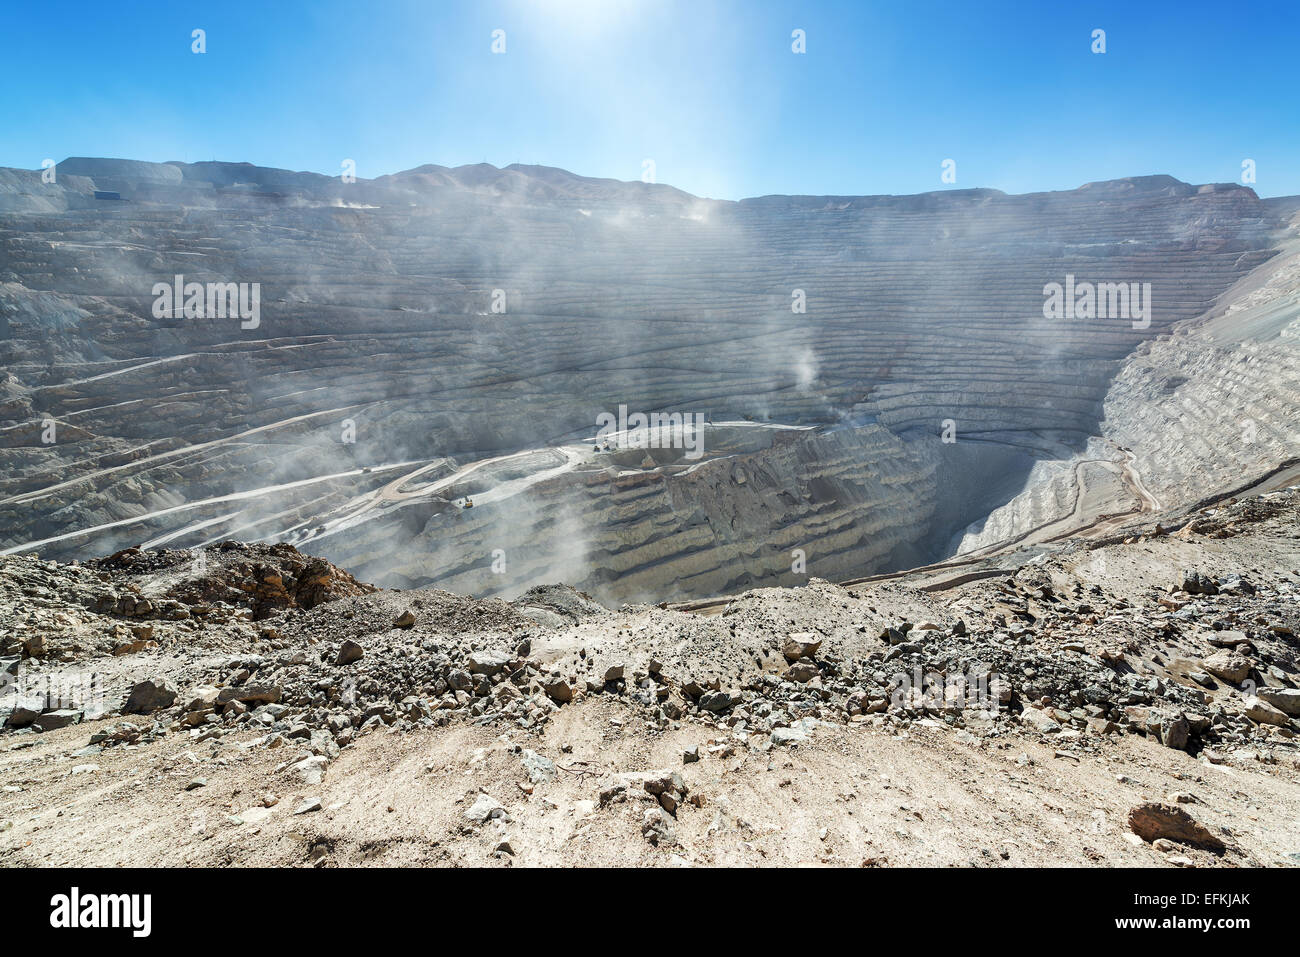 View of the open pit copper mine of Chuquicamata, Chile Stock Photo